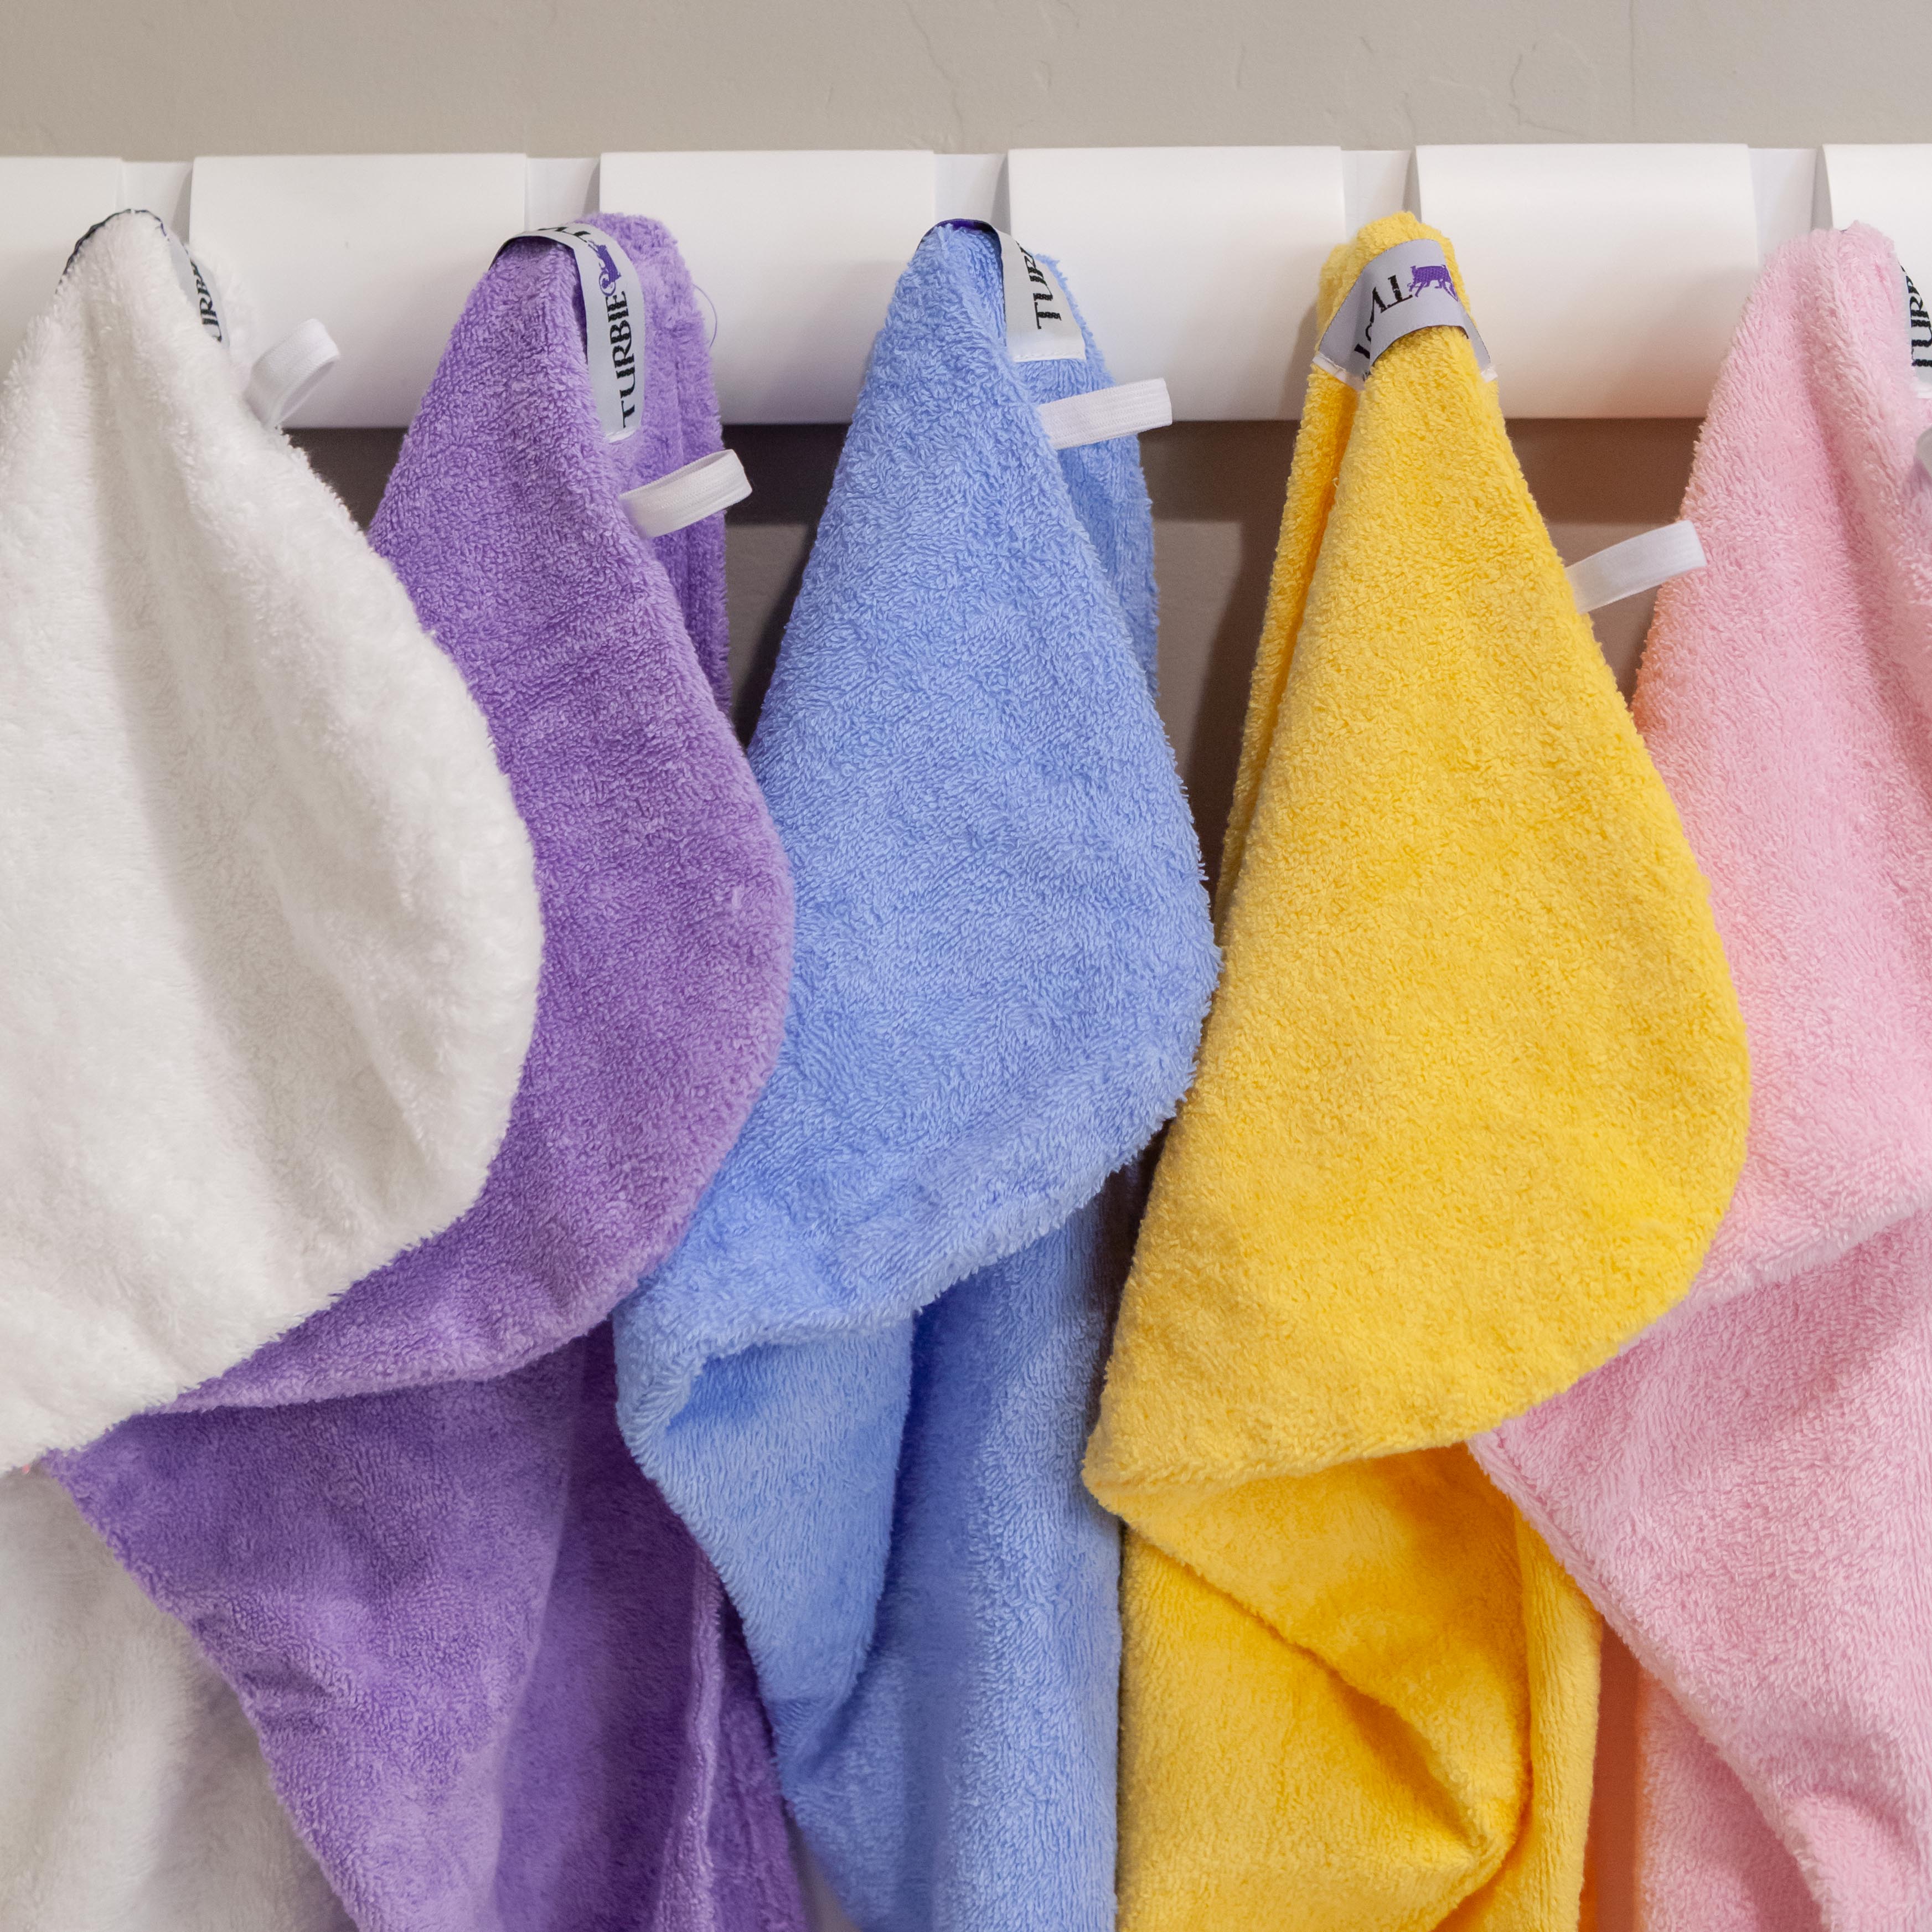 Turbie Twist the Original Microfiber Super-Absorbent Hair Towel, Colors May Vary - image 5 of 6